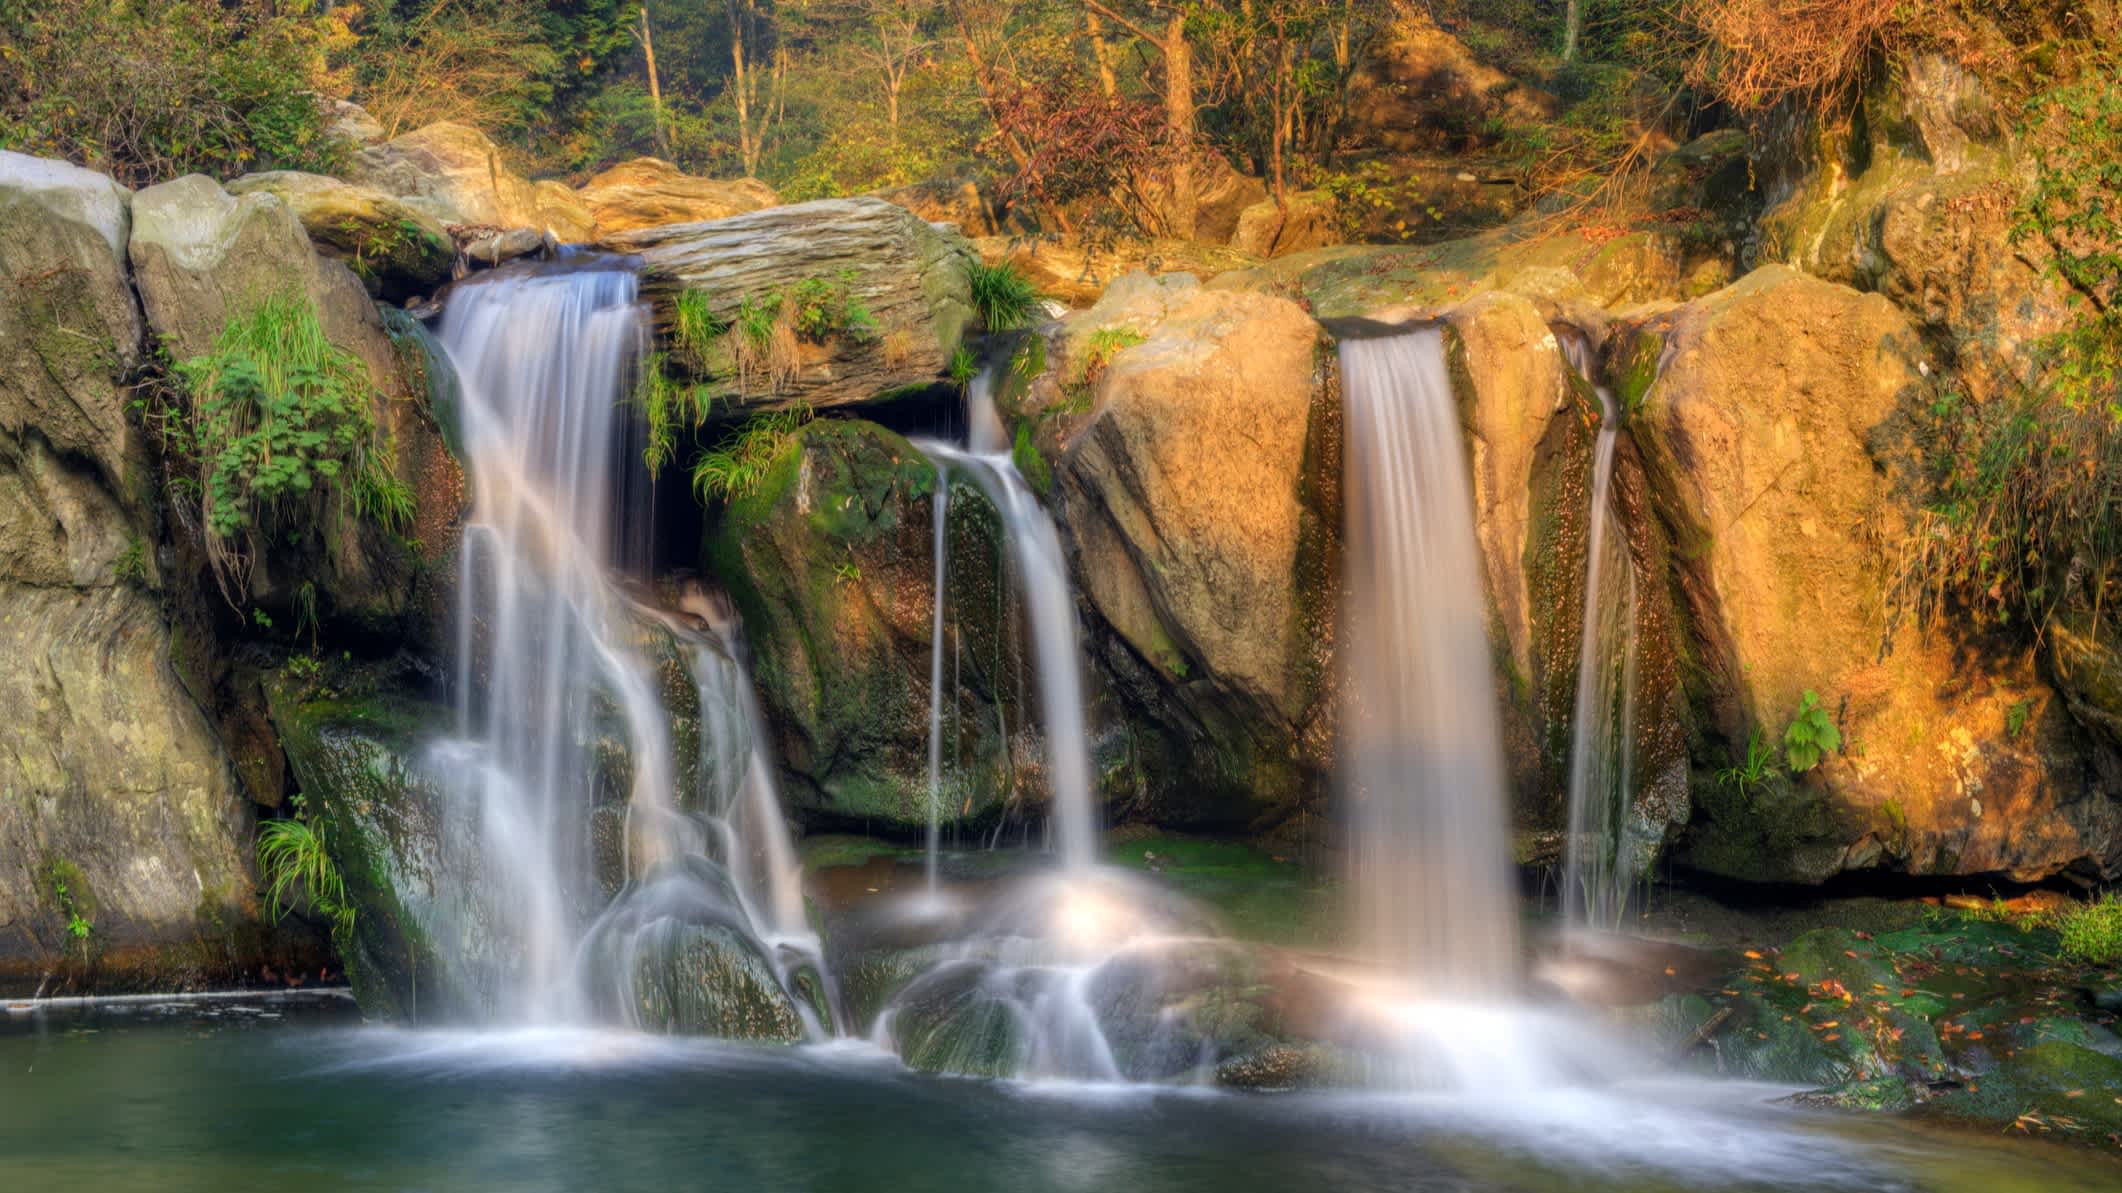 Wasserfall im Herbst, Mt. Lu Shan, China

